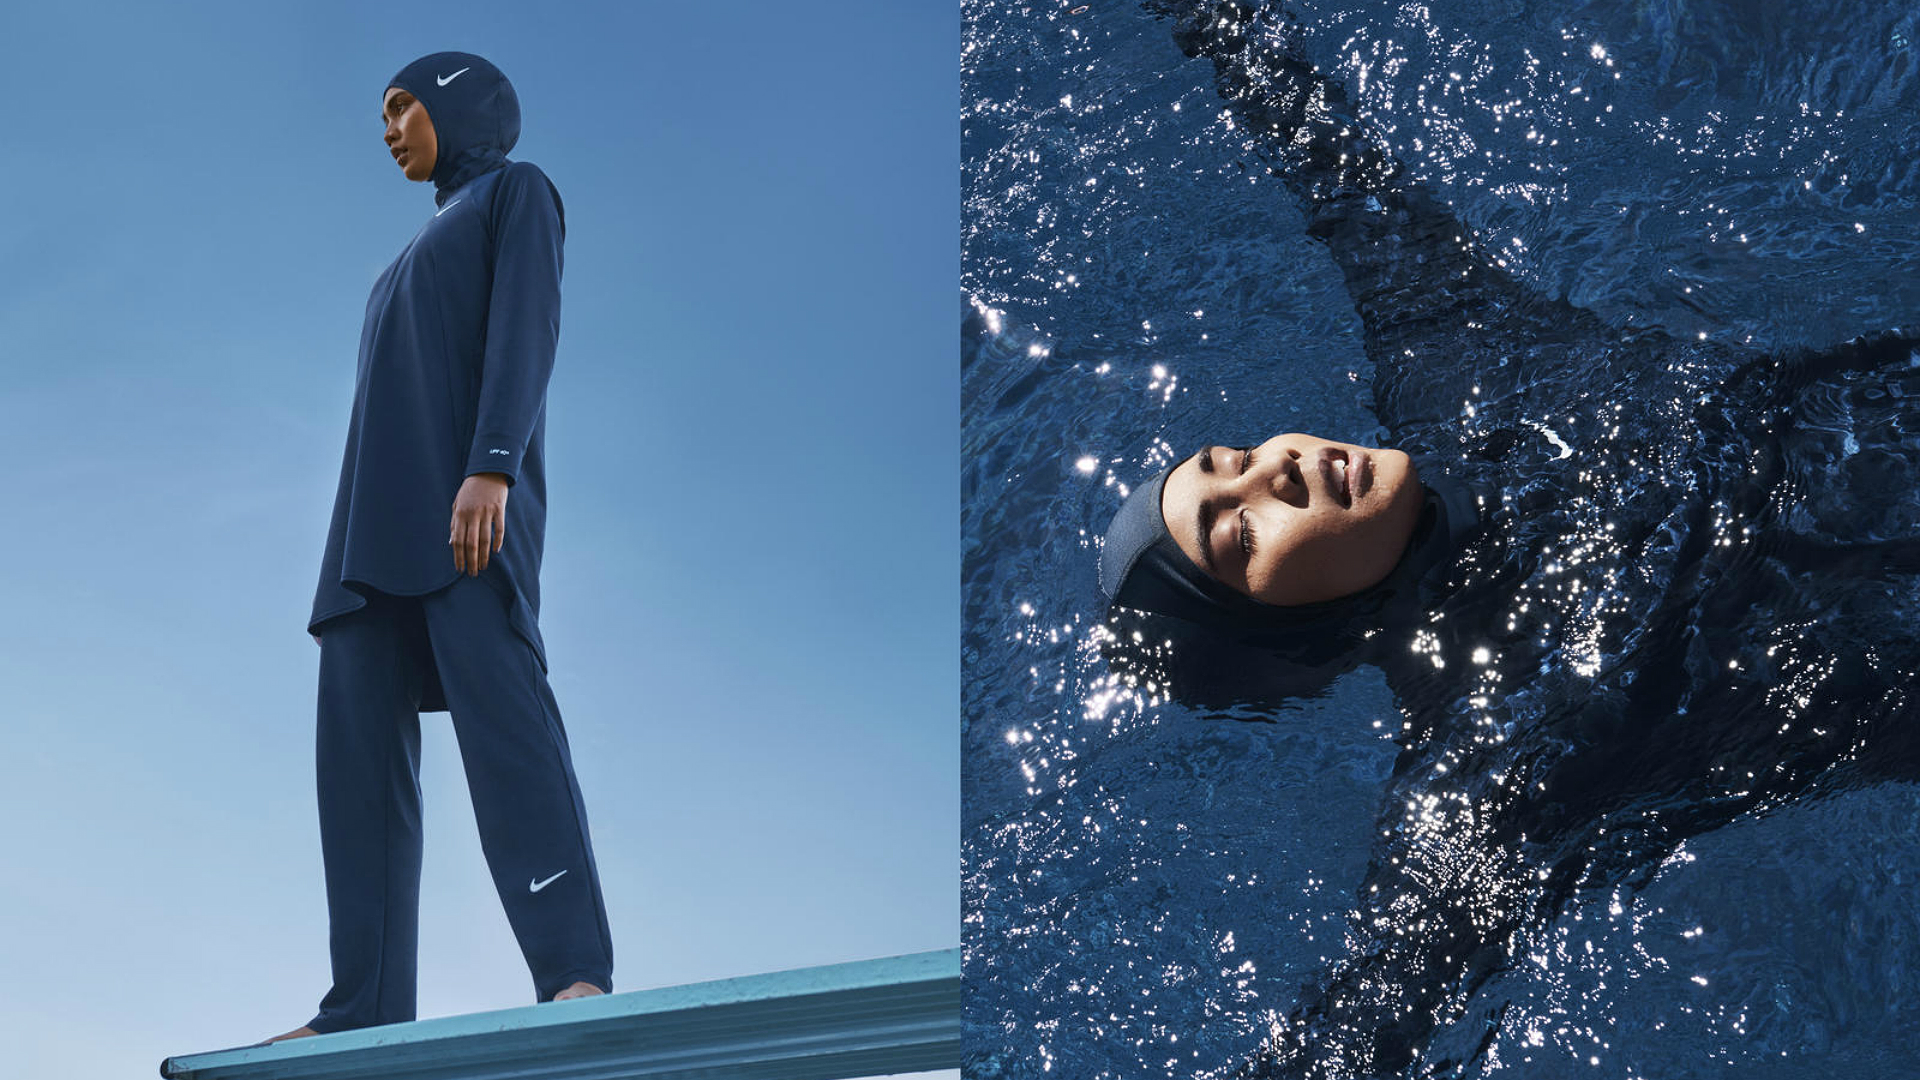 begin Quagga abces Nike's Modest Swimsuit makes tides in Islamic fashion